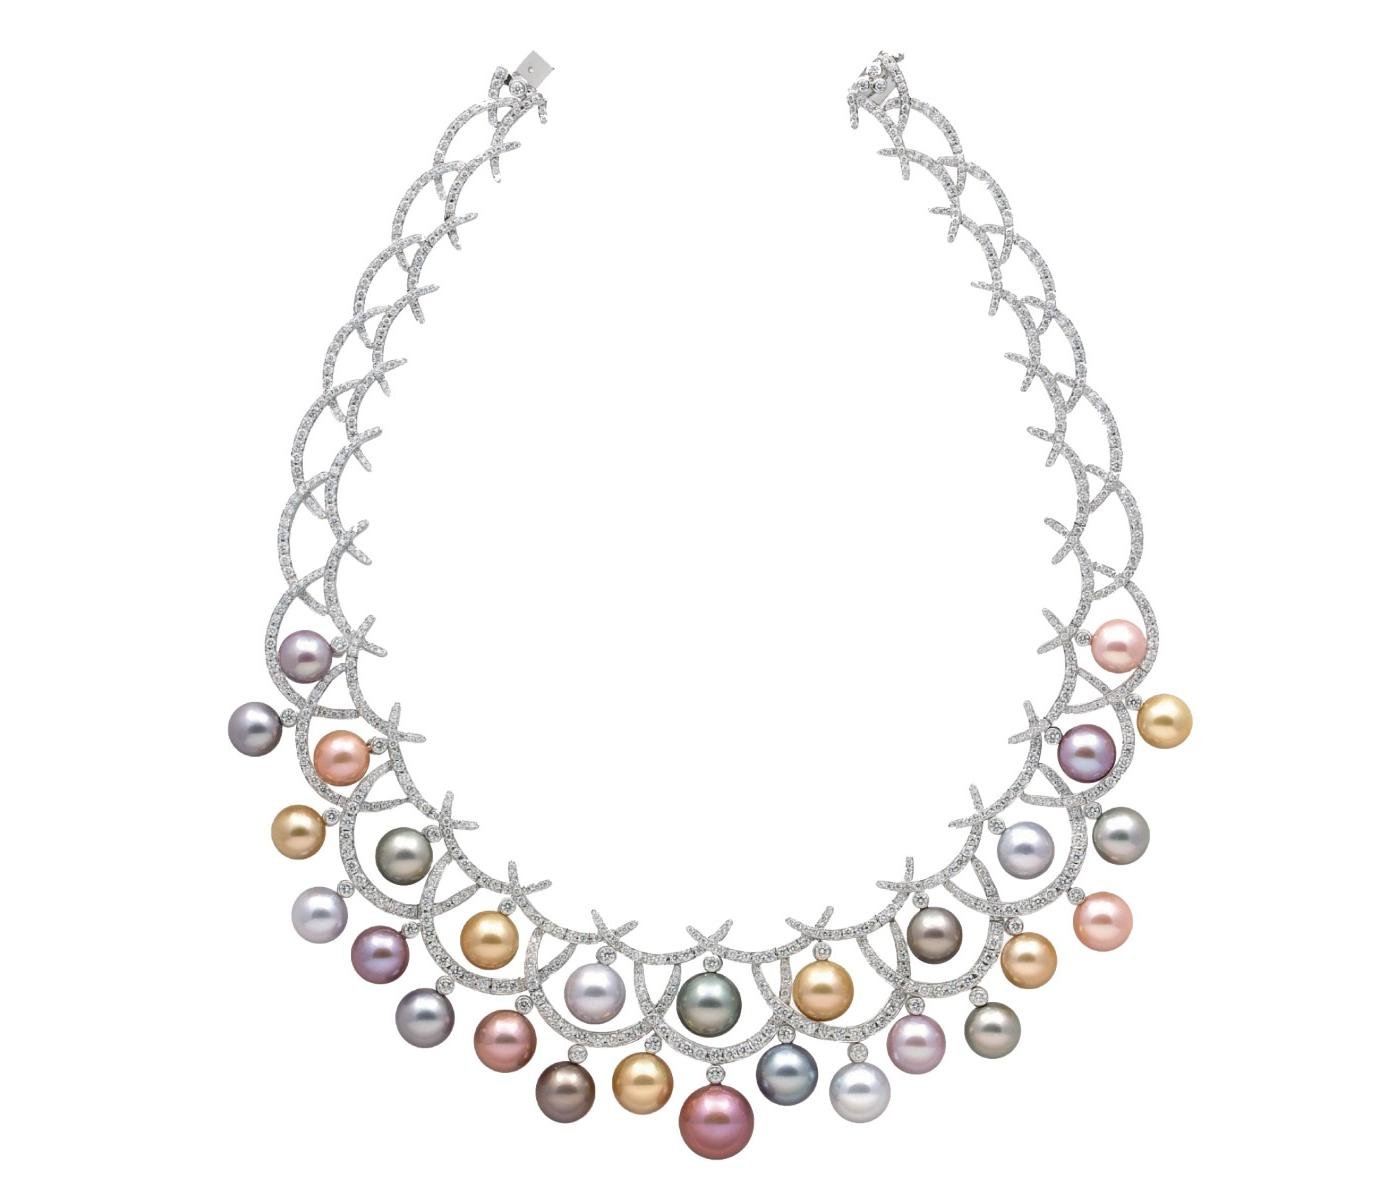 Necklace by Yoko London